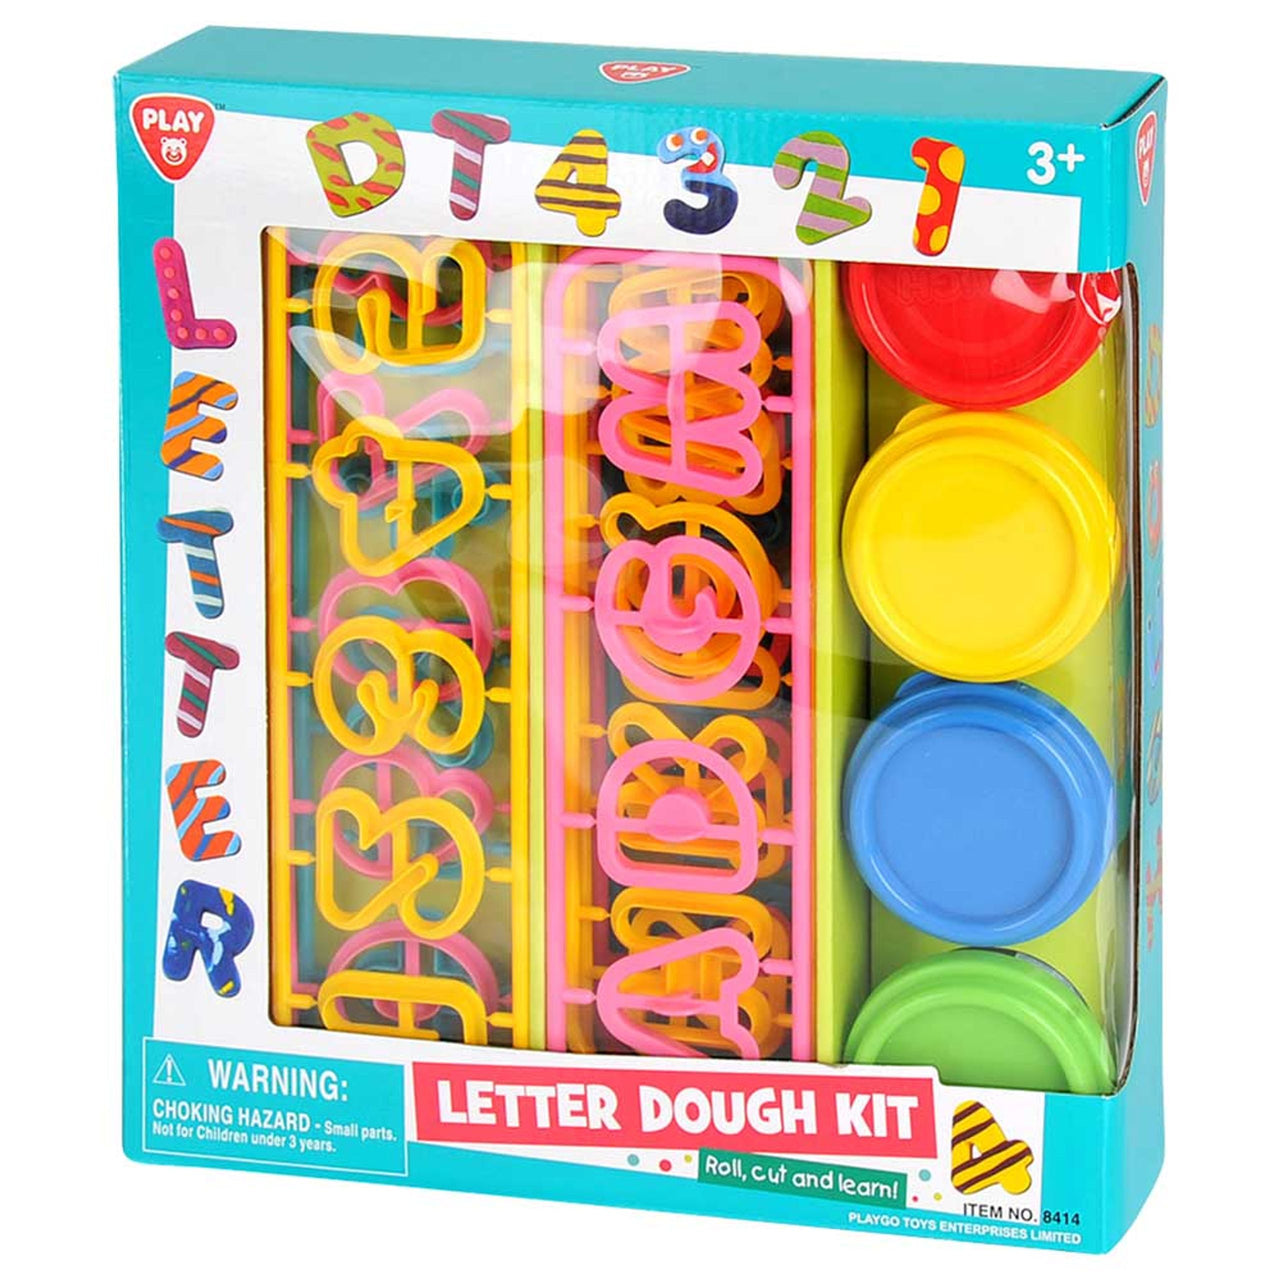 PlayGo - Letter Dough Kit Toy For Kids